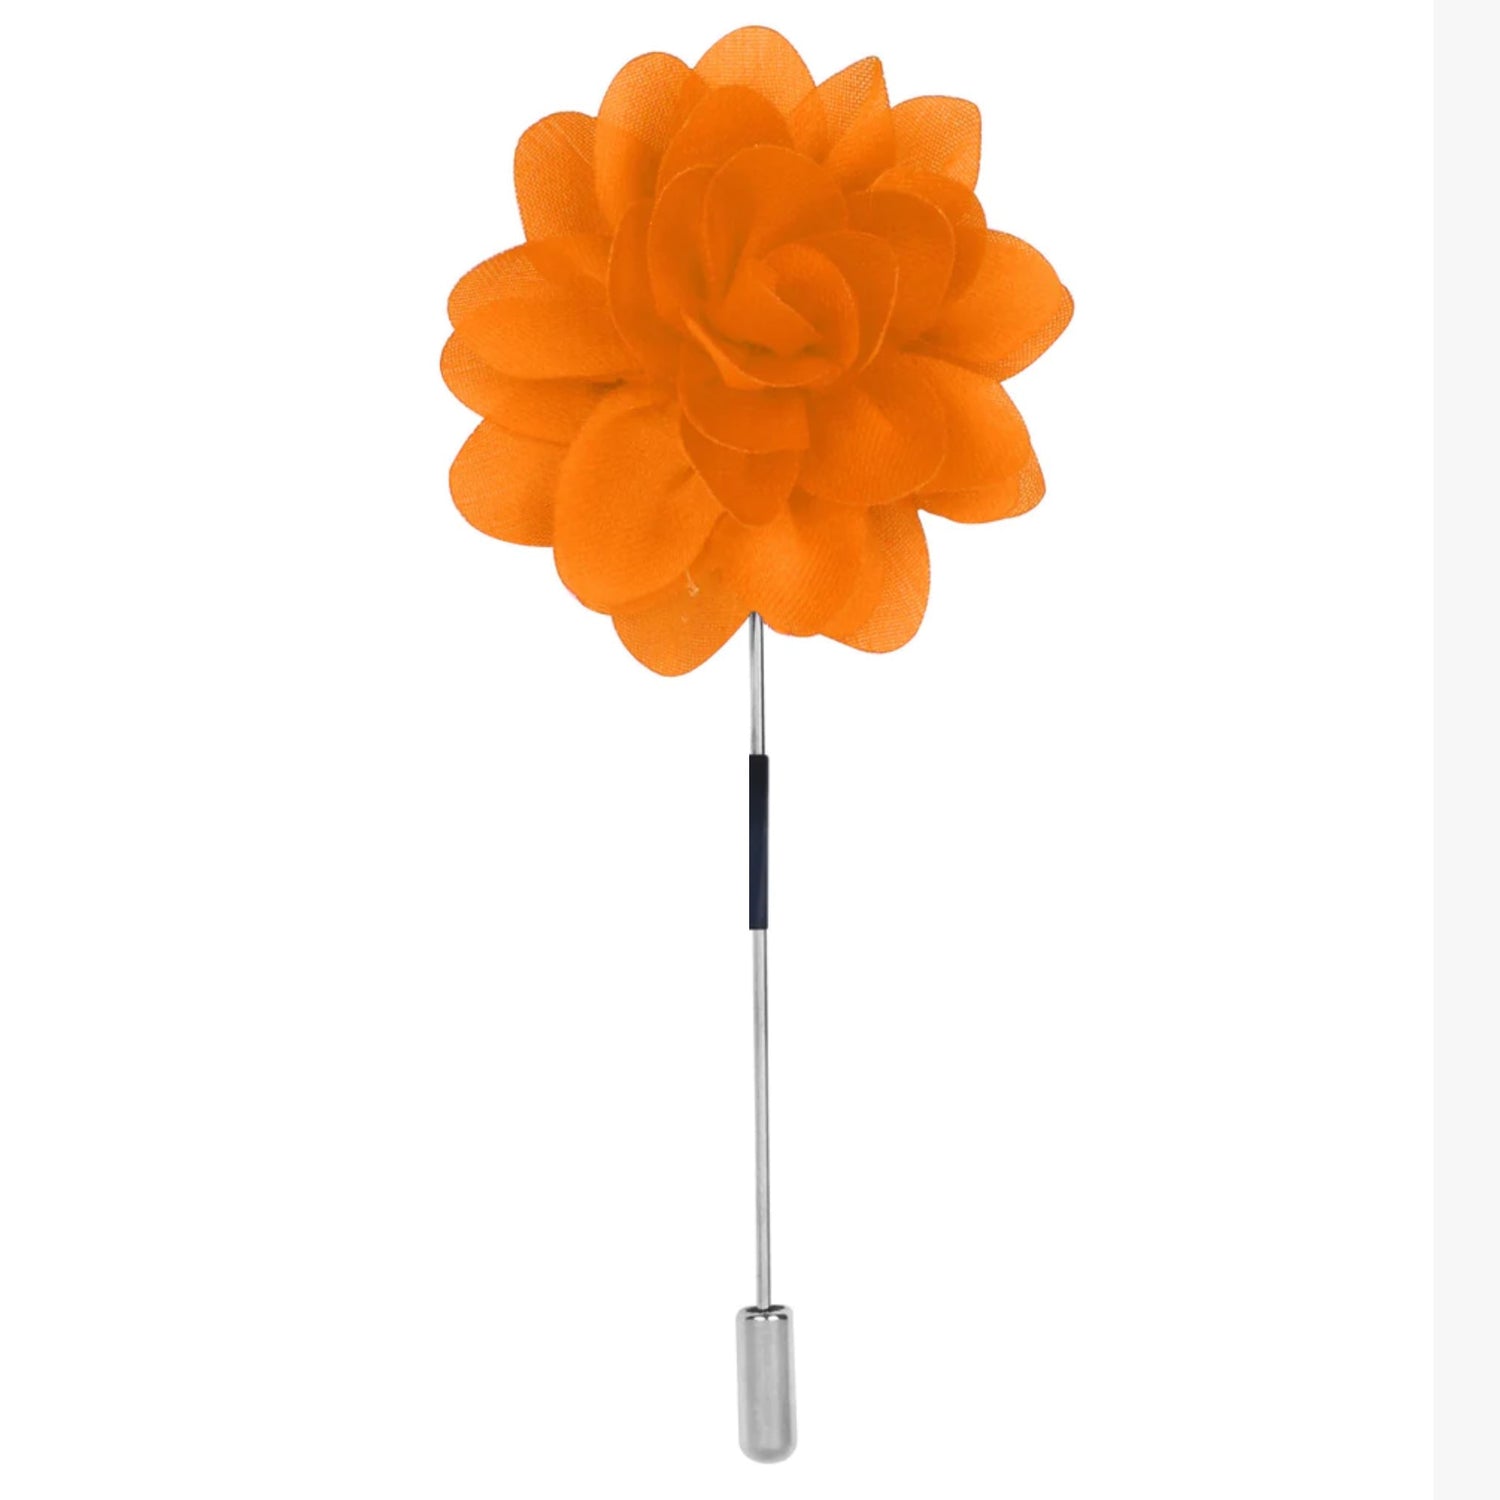 Main View: An Orange Color Star Flower Shaped Lapel Pin||Orange